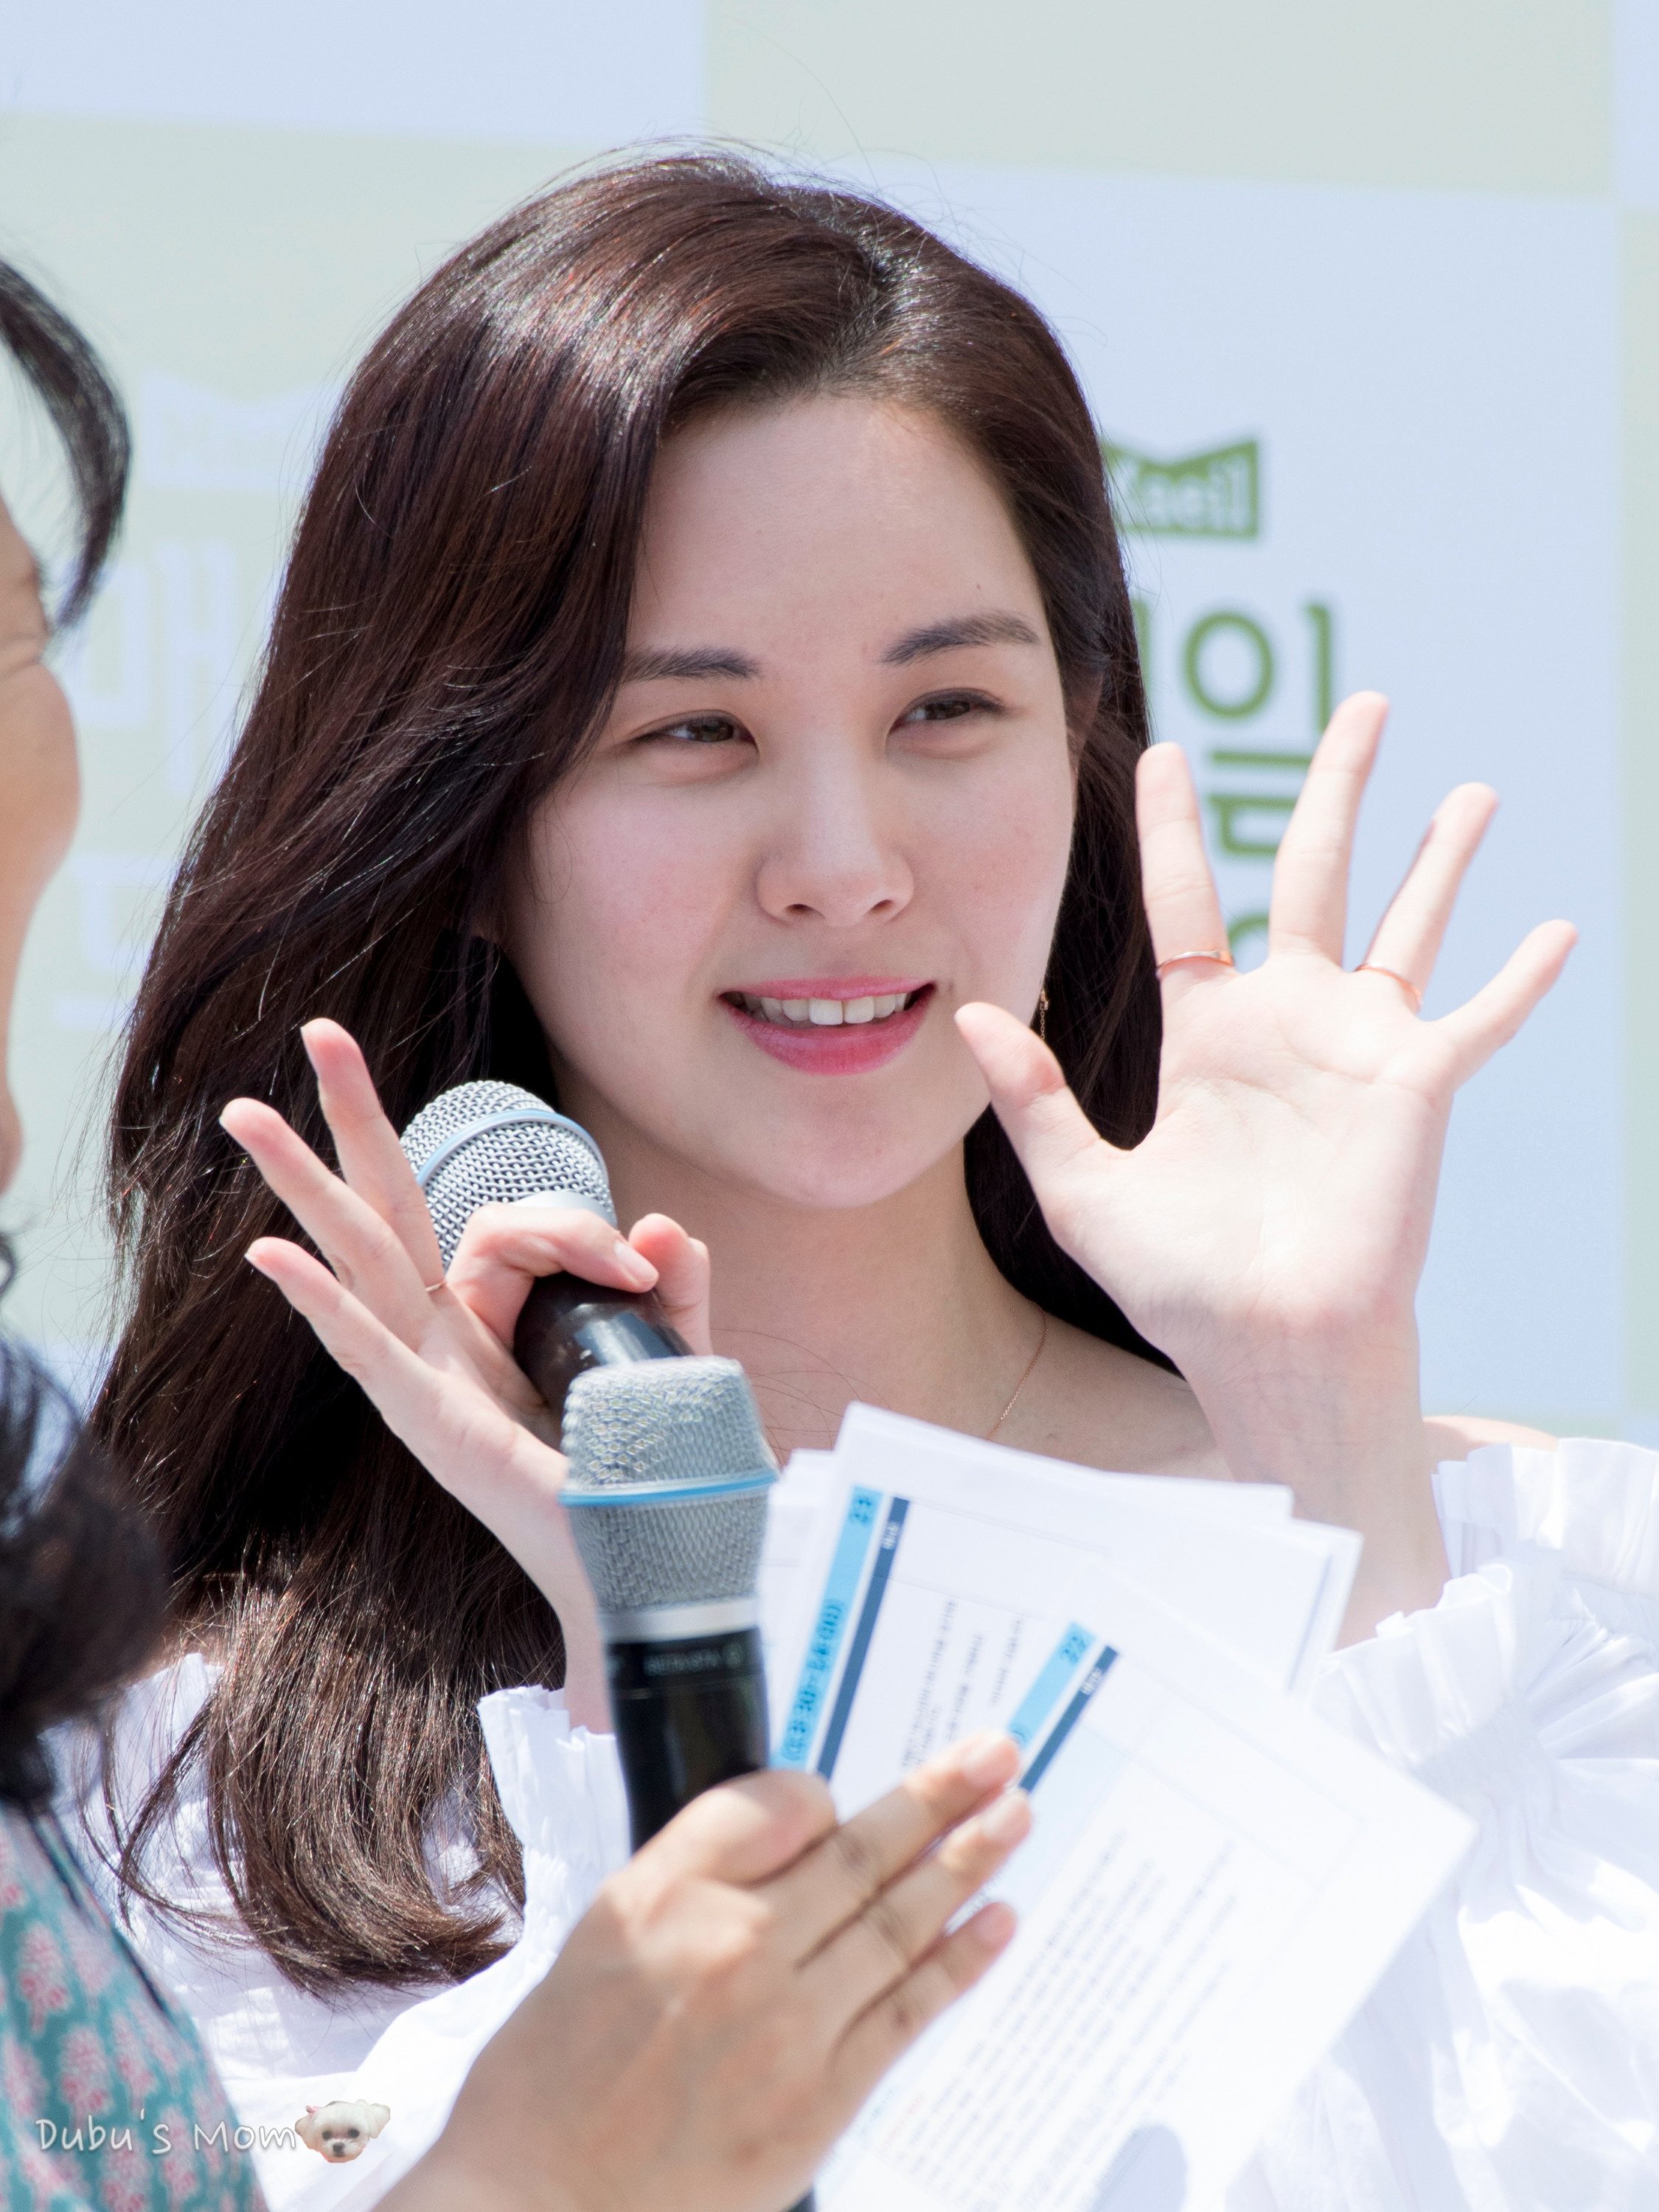  [PIC][03-06-2017]SeoHyun tham dự sự kiện “City Forestival - Maeil Duyou 'Confidence Diary'” vào chiều nay - Page 2 ALP2ZyMPm1-3000x3000